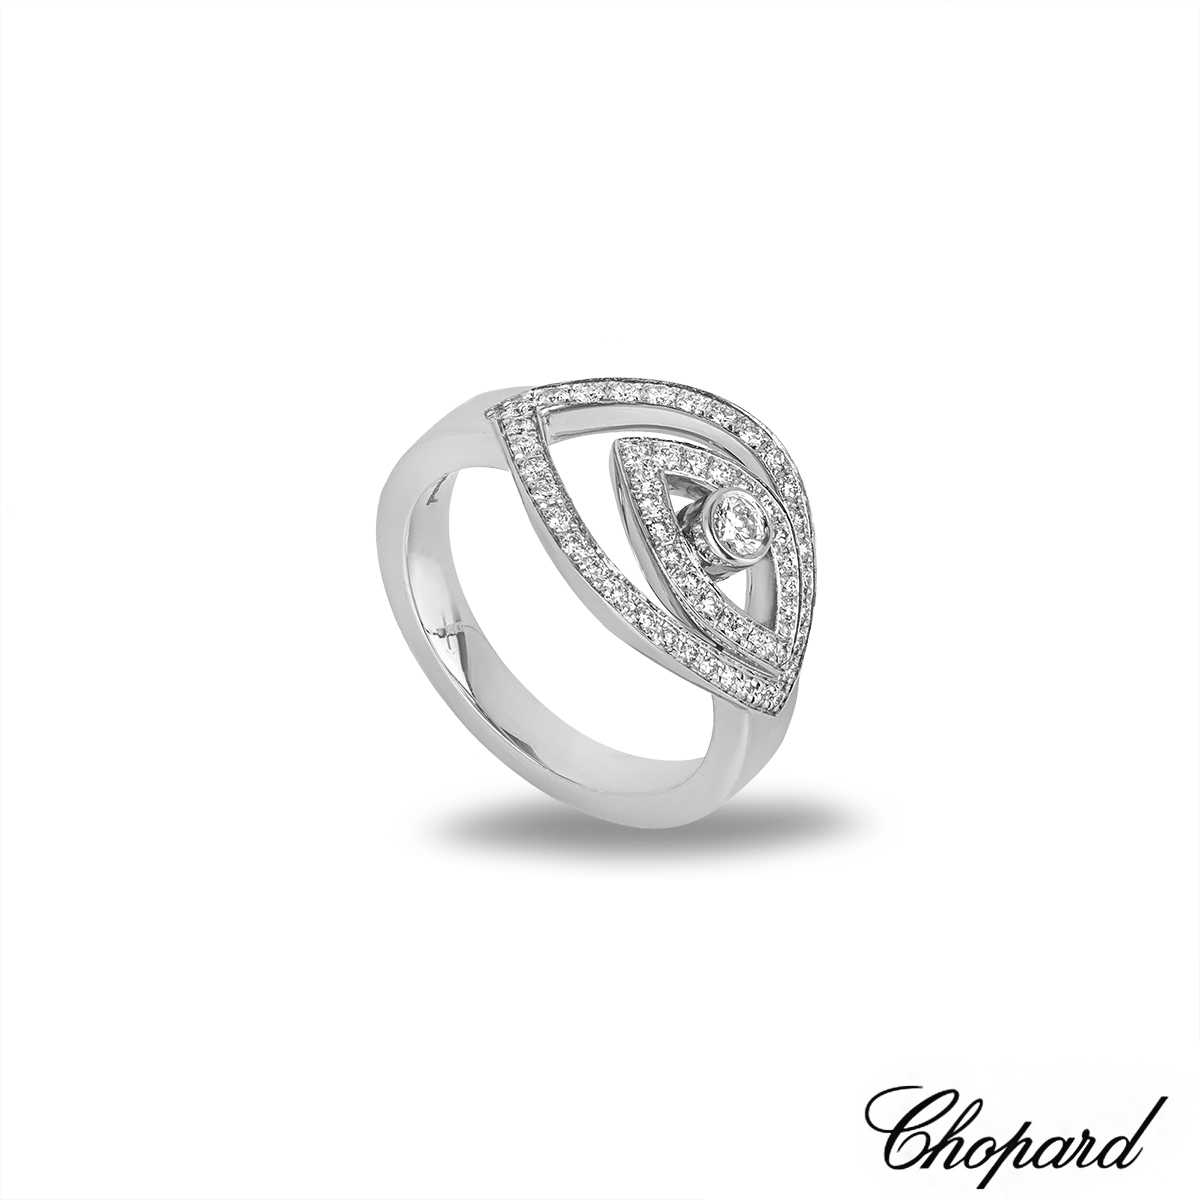 Chopard White Gold Happy Spirit Diamond Ring 82/5655-1109